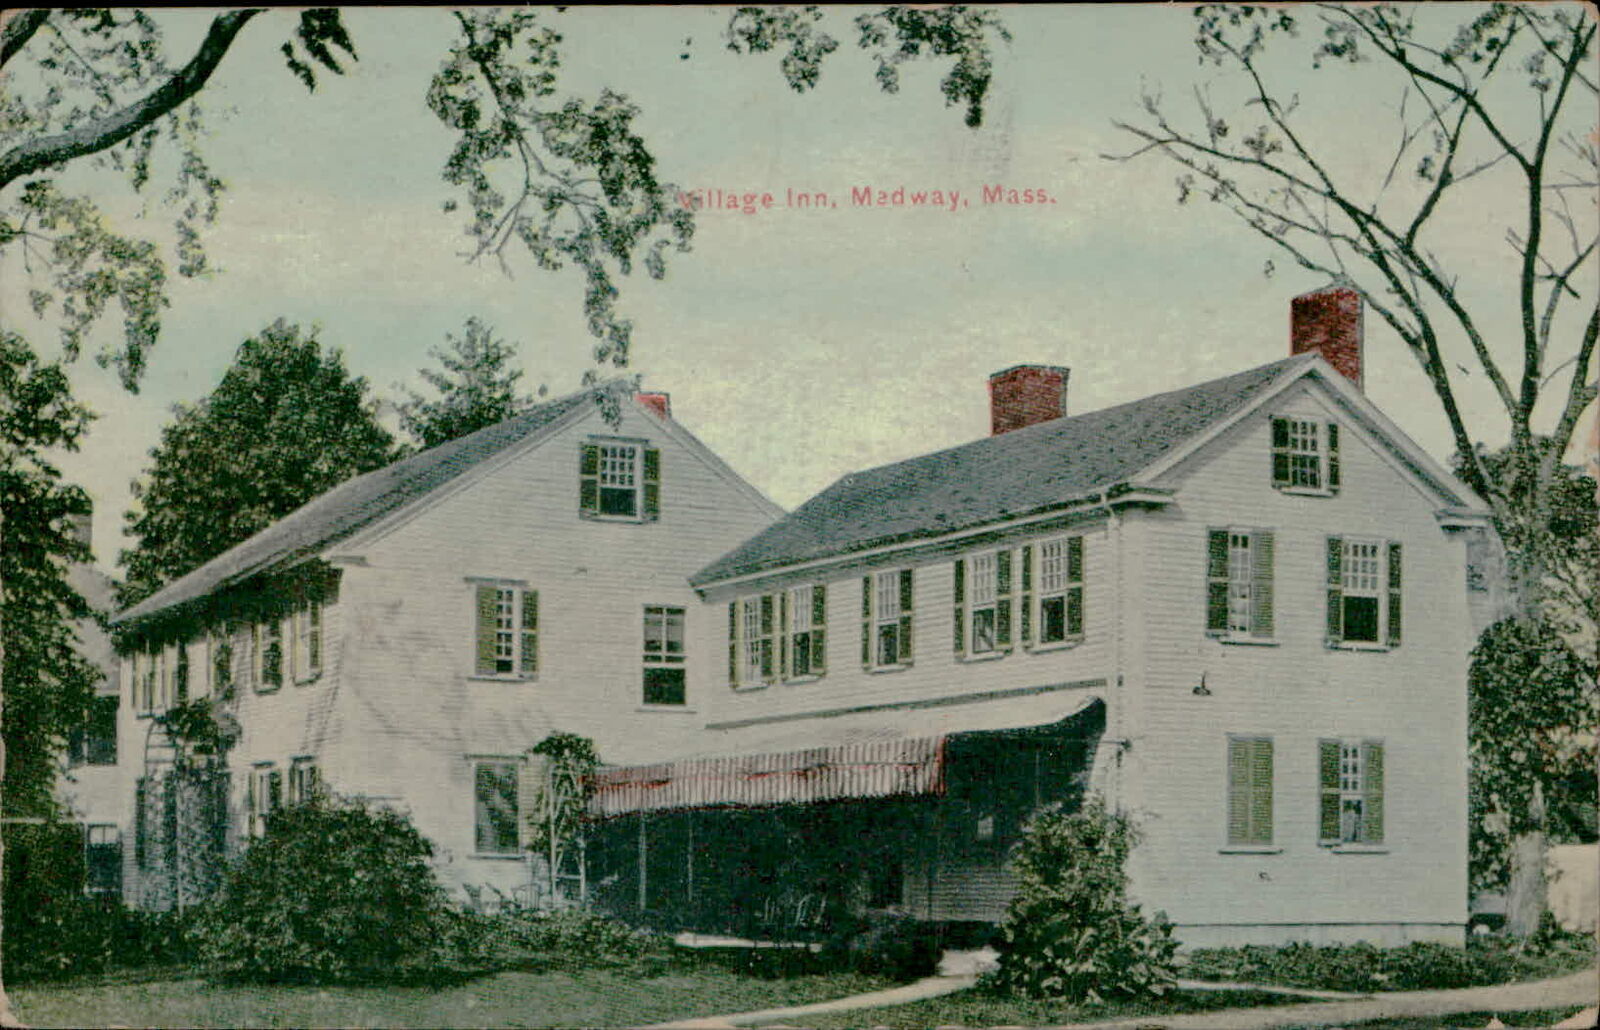 Postcard: 40 Village Inn, Madway, Mass.